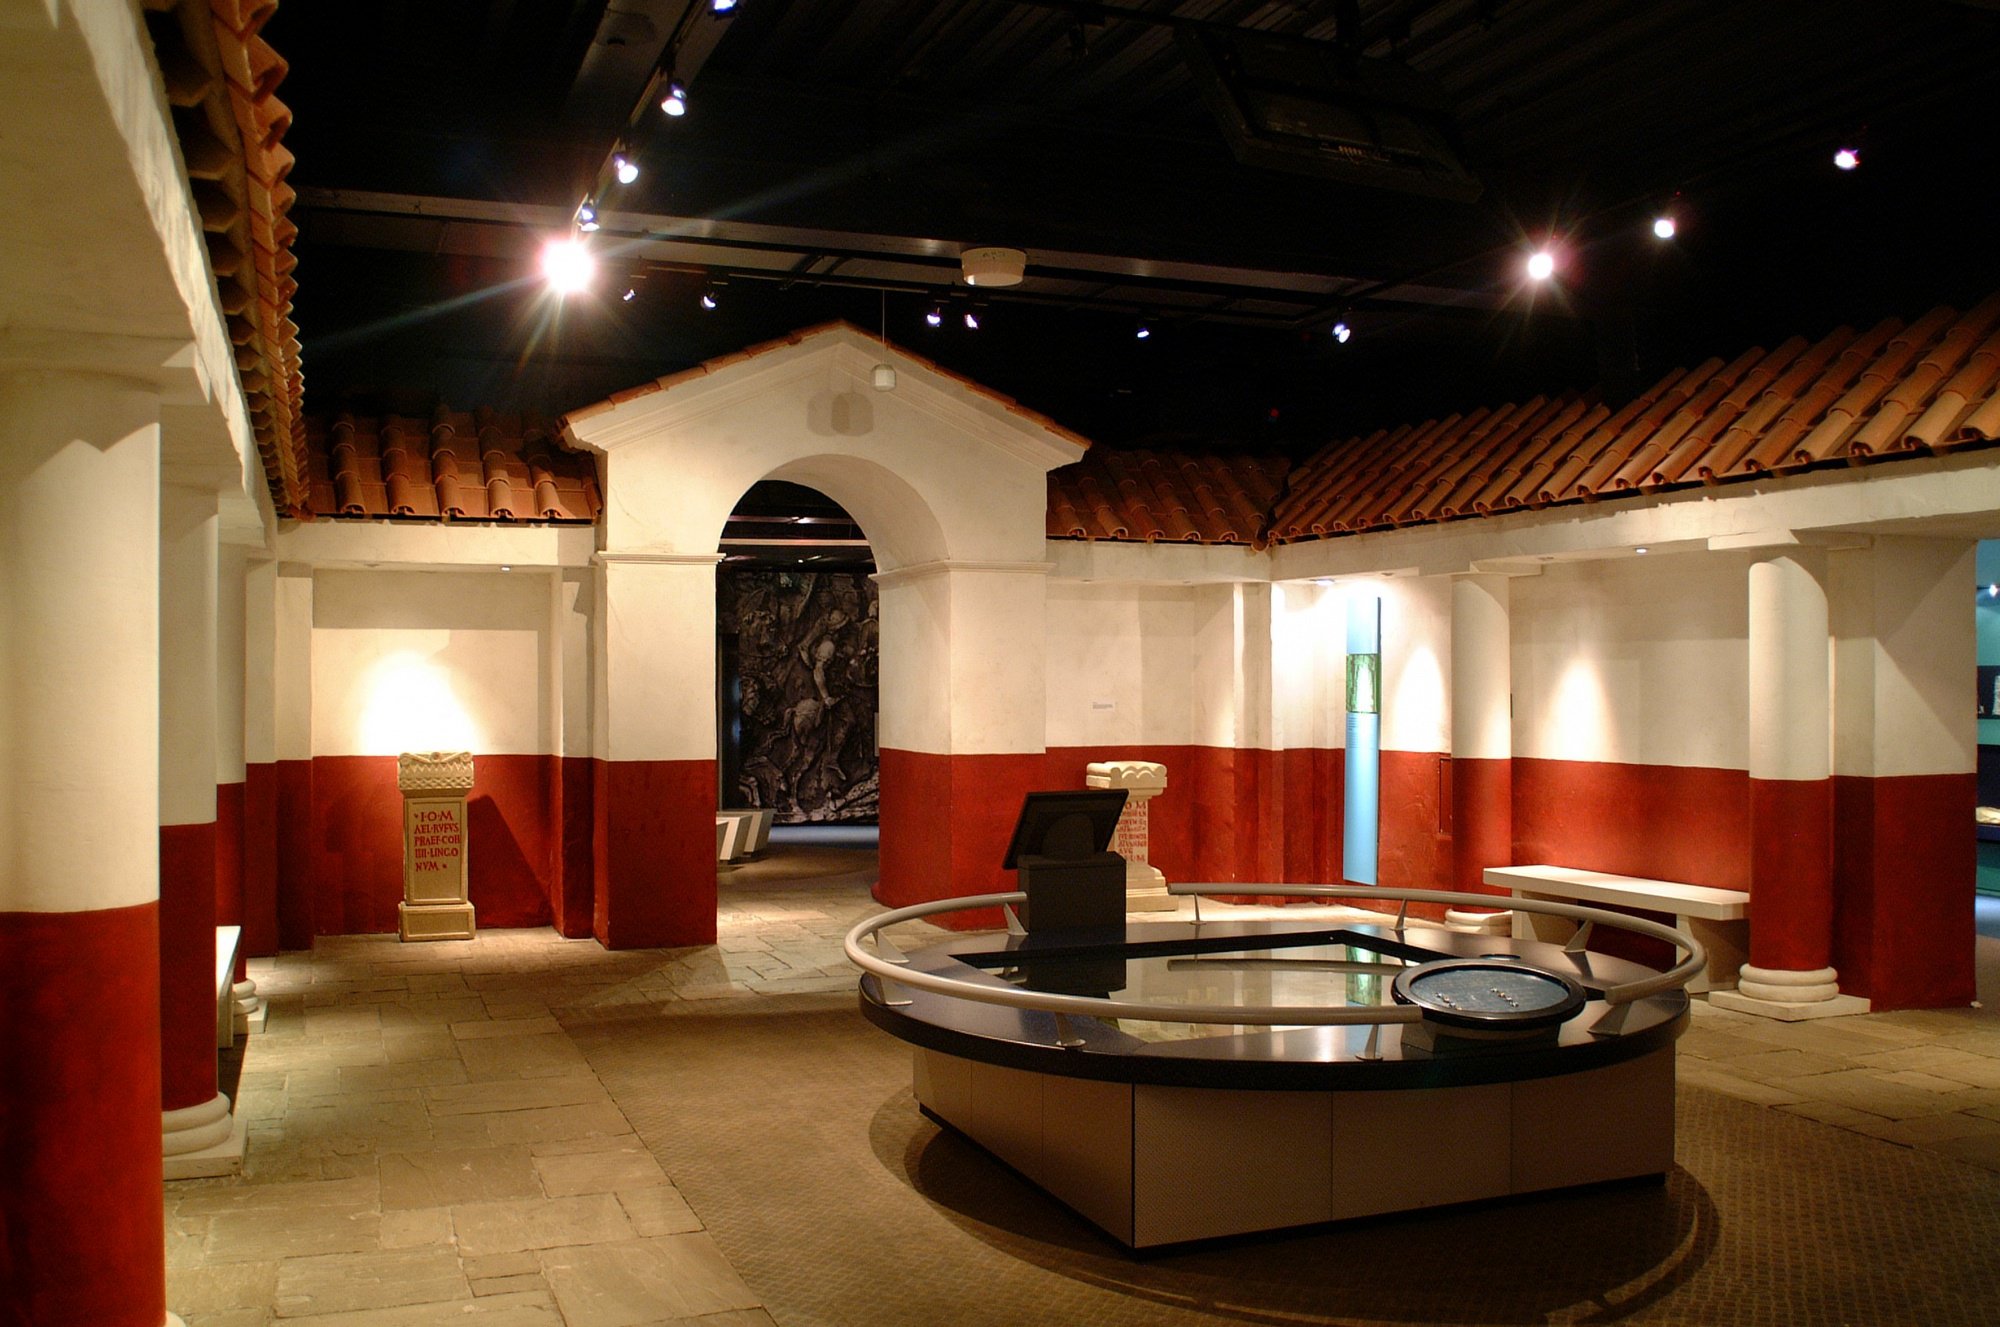 The Roman Gallery